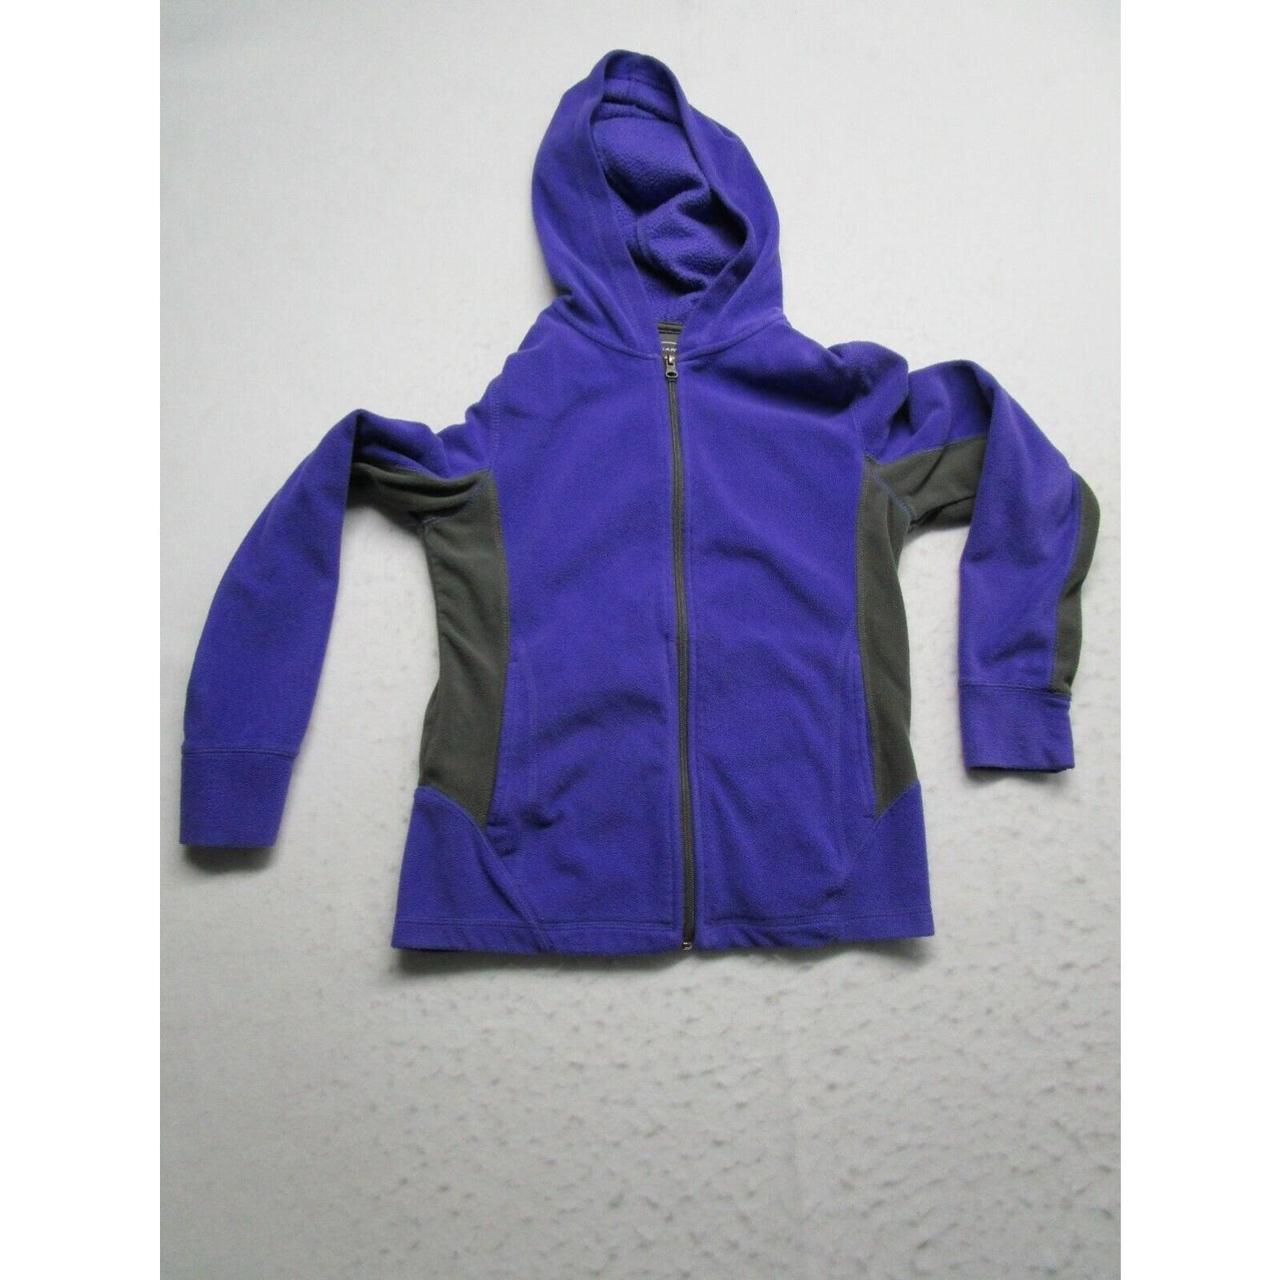 Product Image 1 - Tek Gear Fleece Sweatshirt Jacket